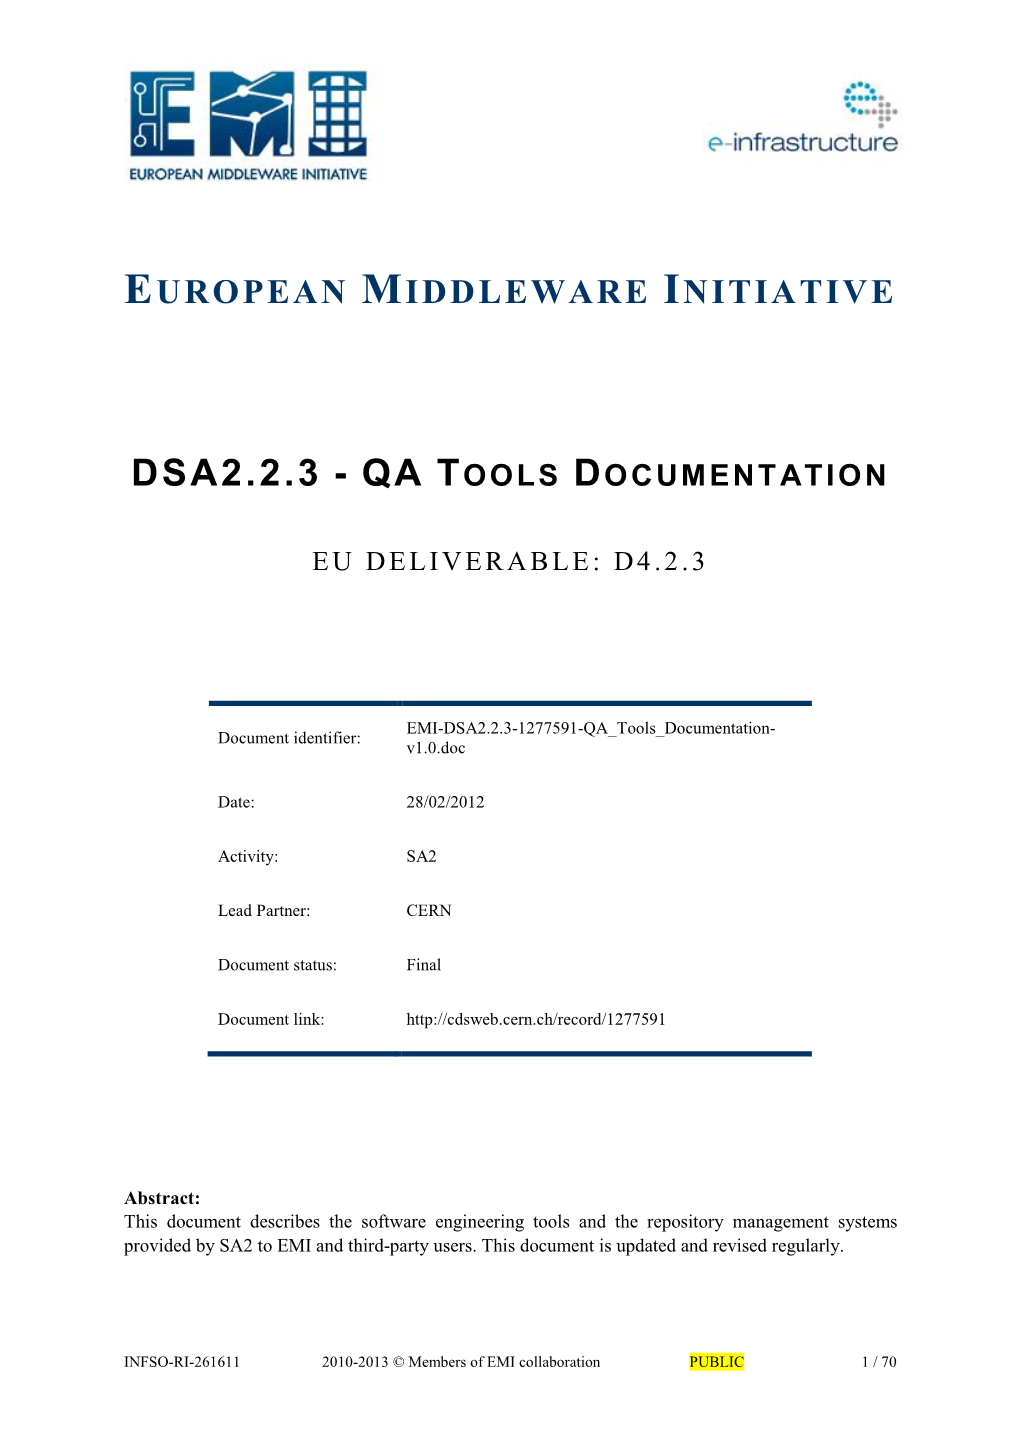 Dsa2.2.3 - Qa Tools Documentation